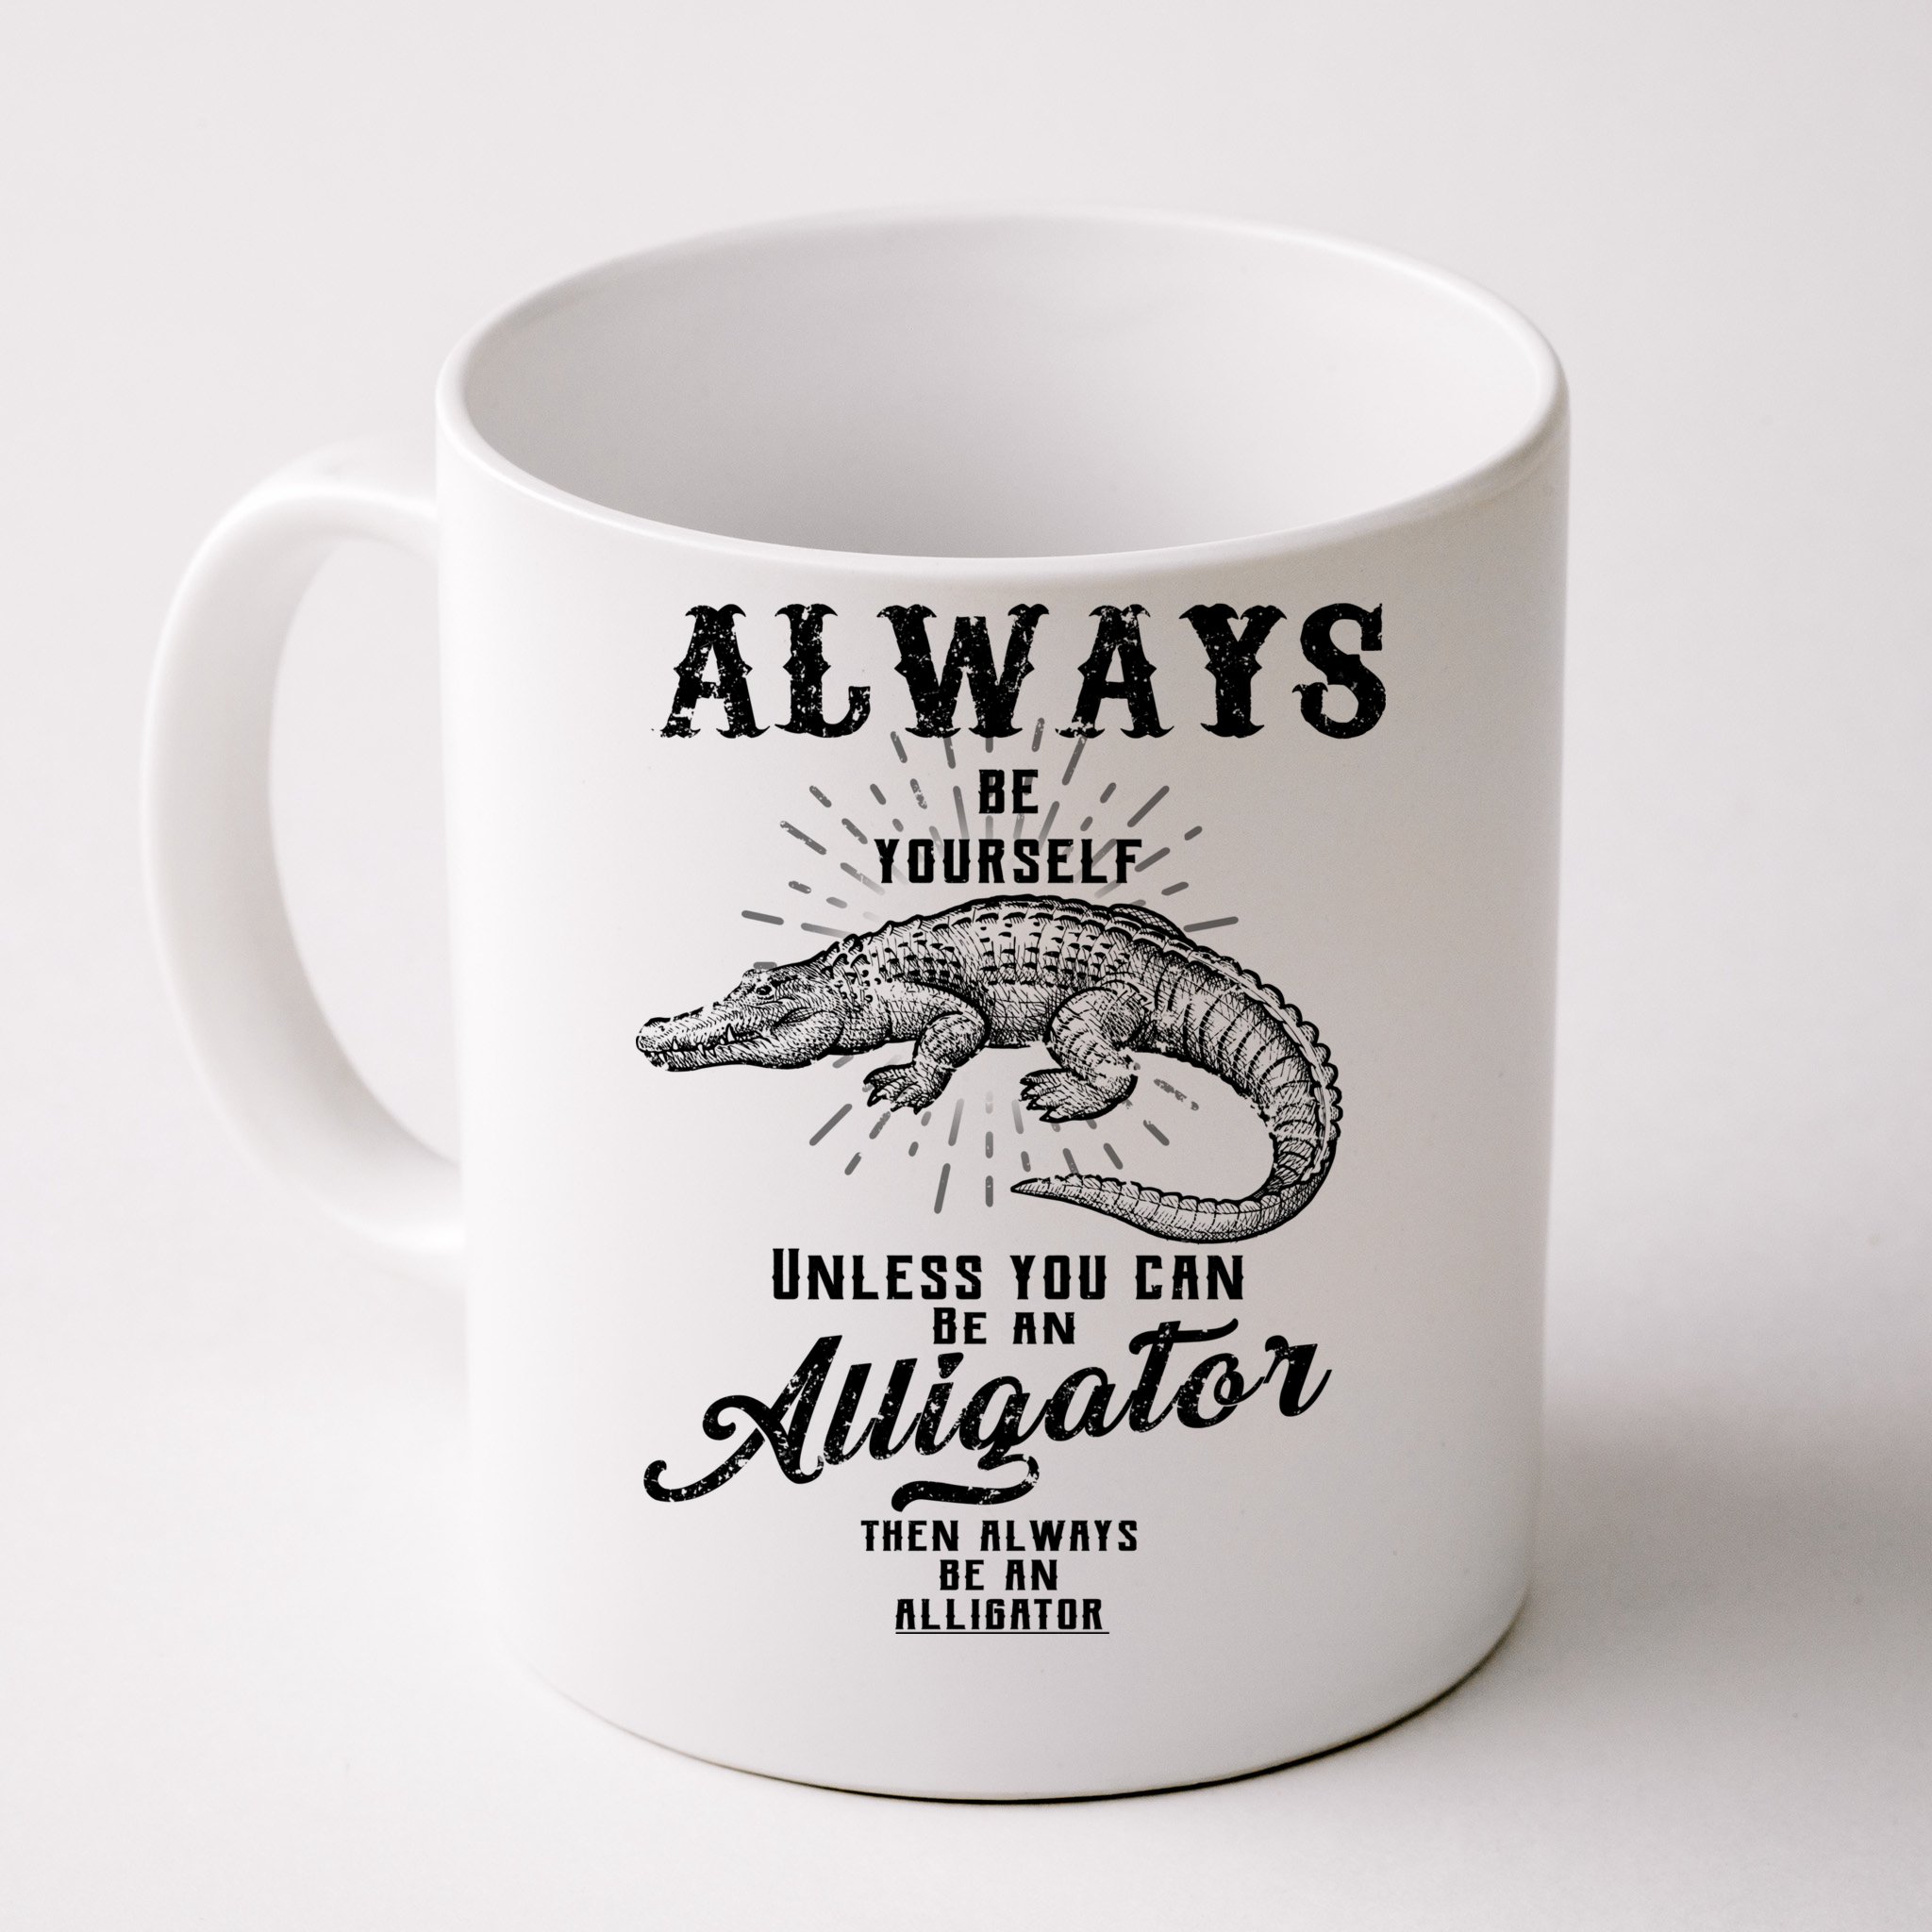 It's a Great Day to be a Gator! Coffee Mug for Sale by OscarAndOphelia